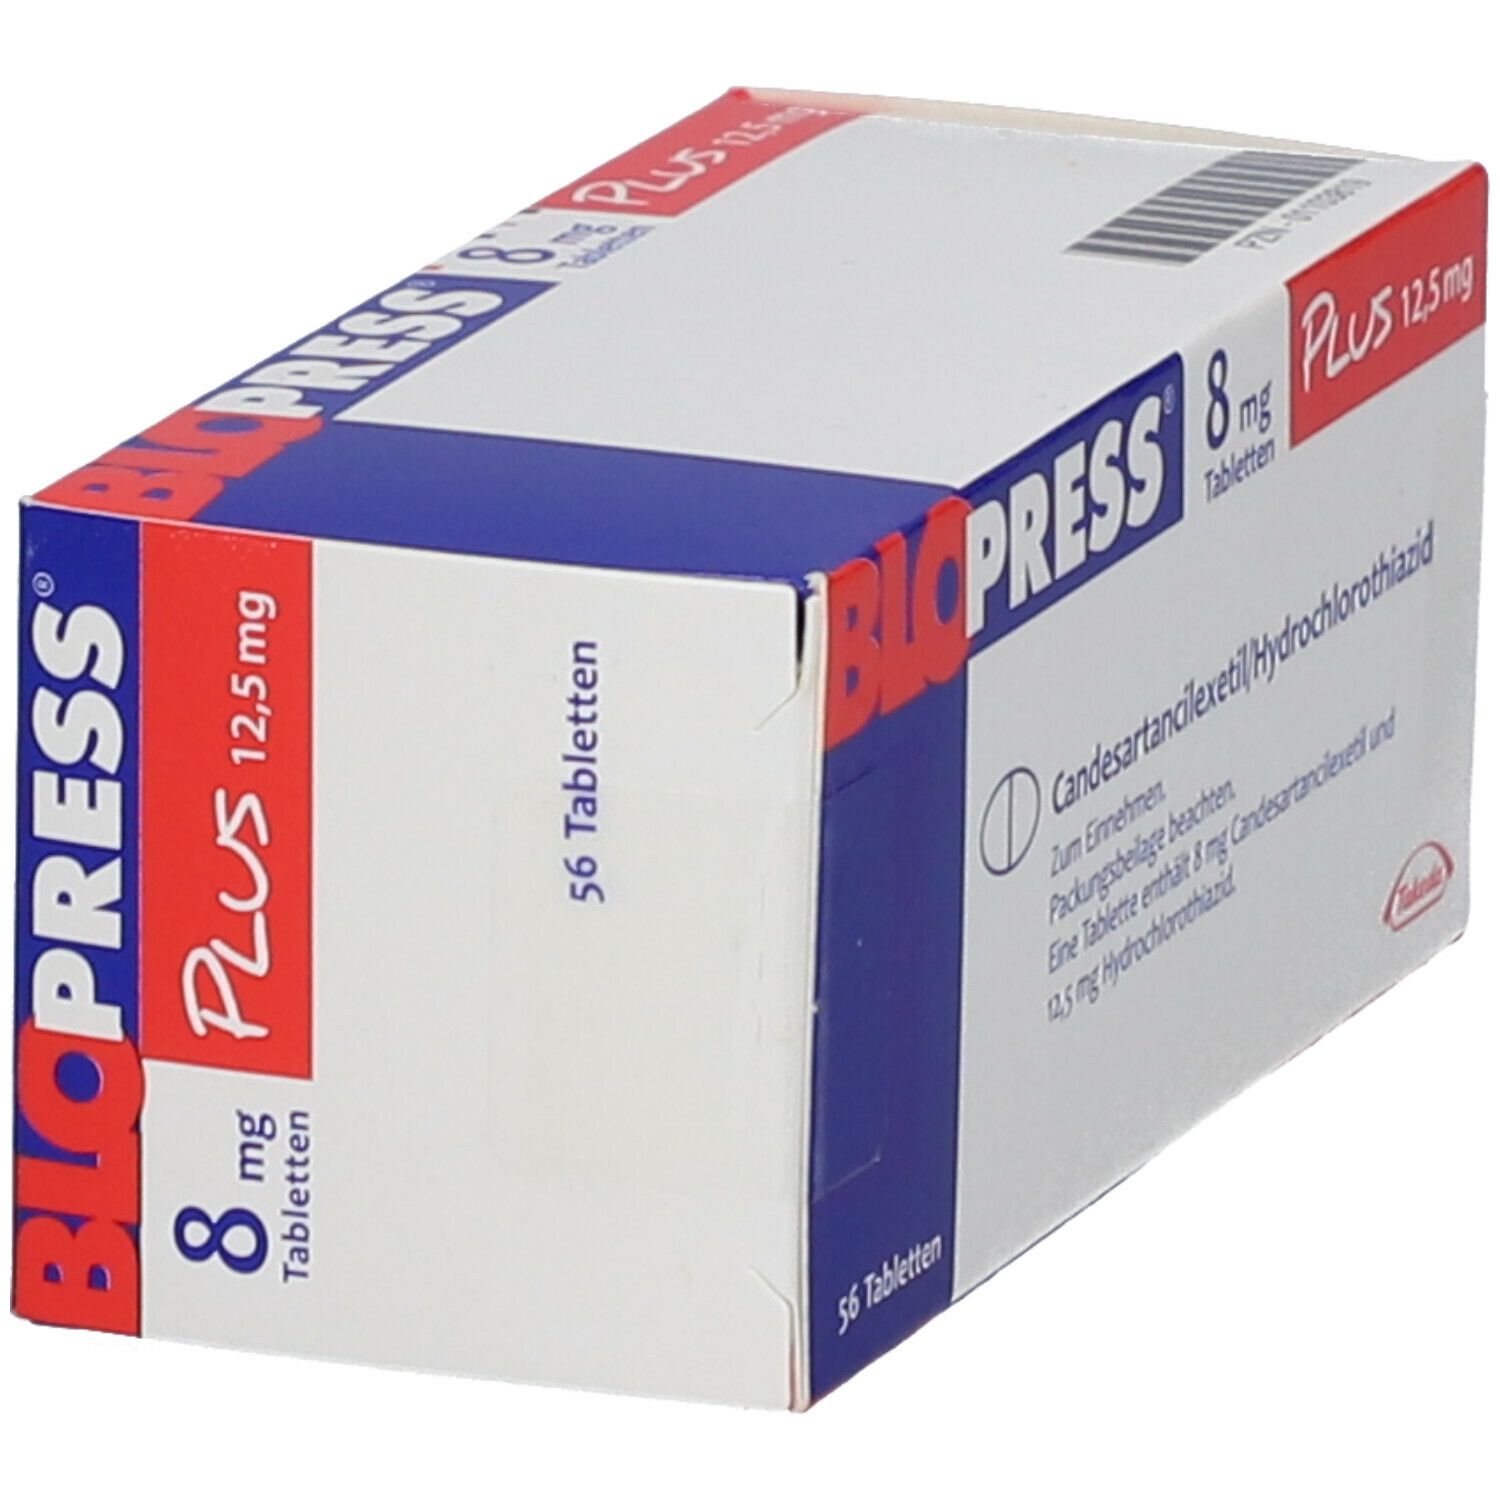 Blopress® 8 mg Plus 12,5 mg